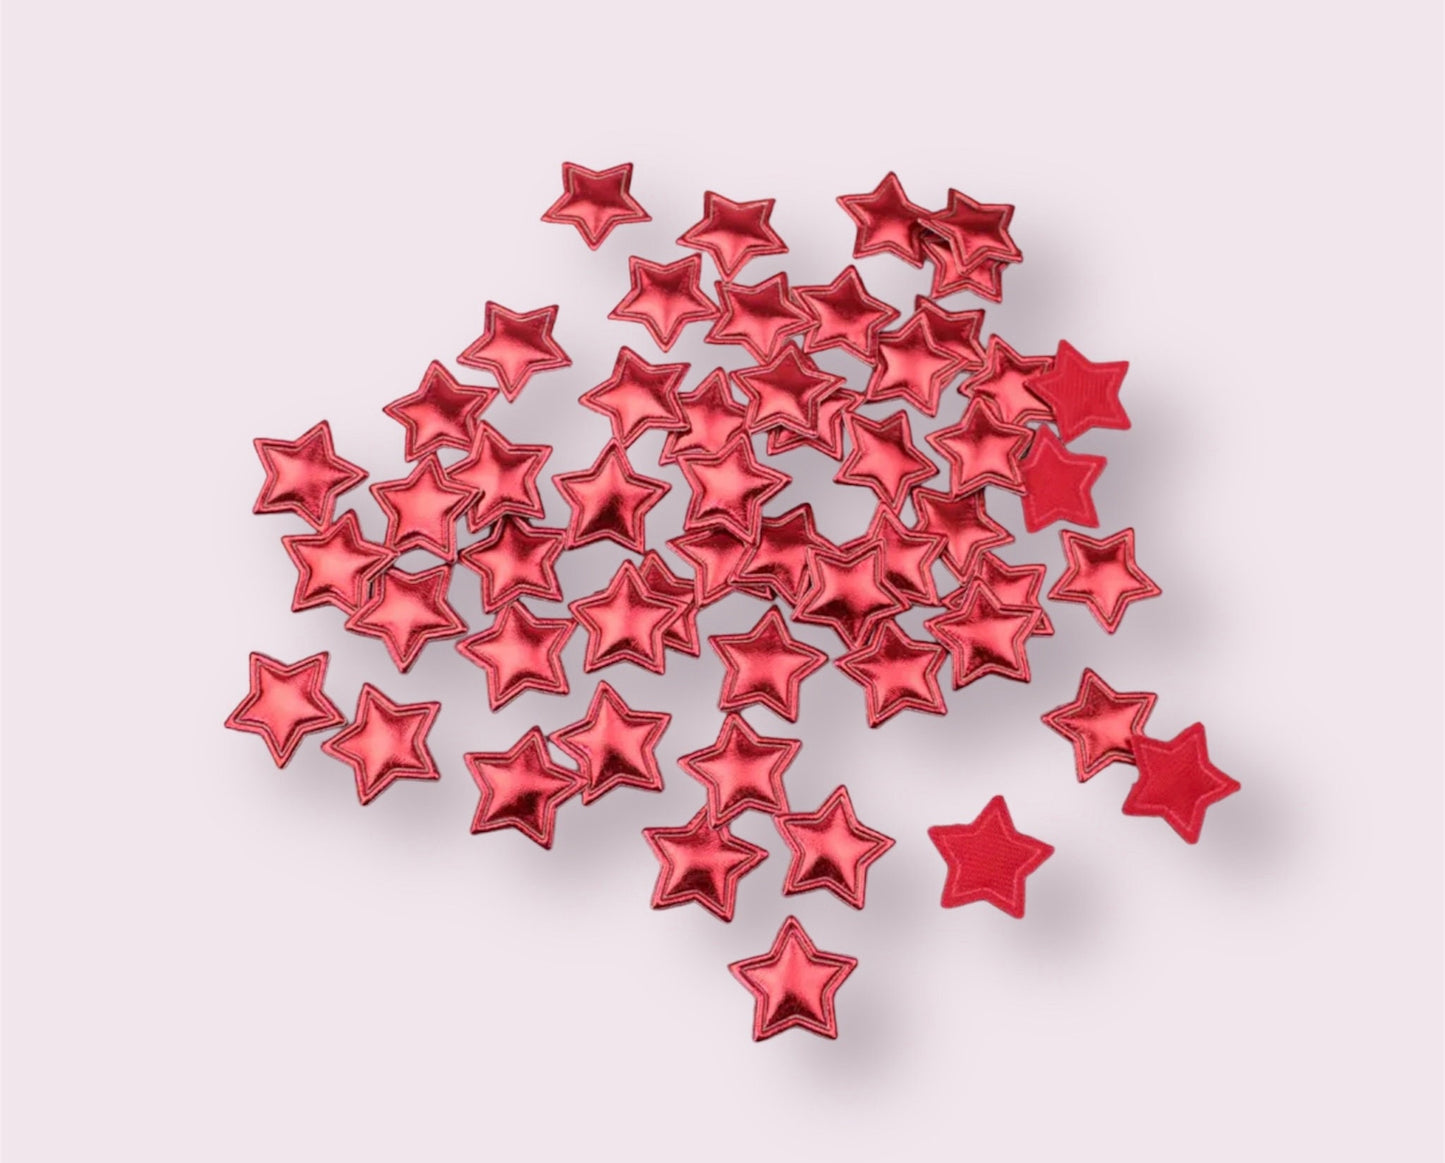 Metallic red padded fabric stars, 25mm